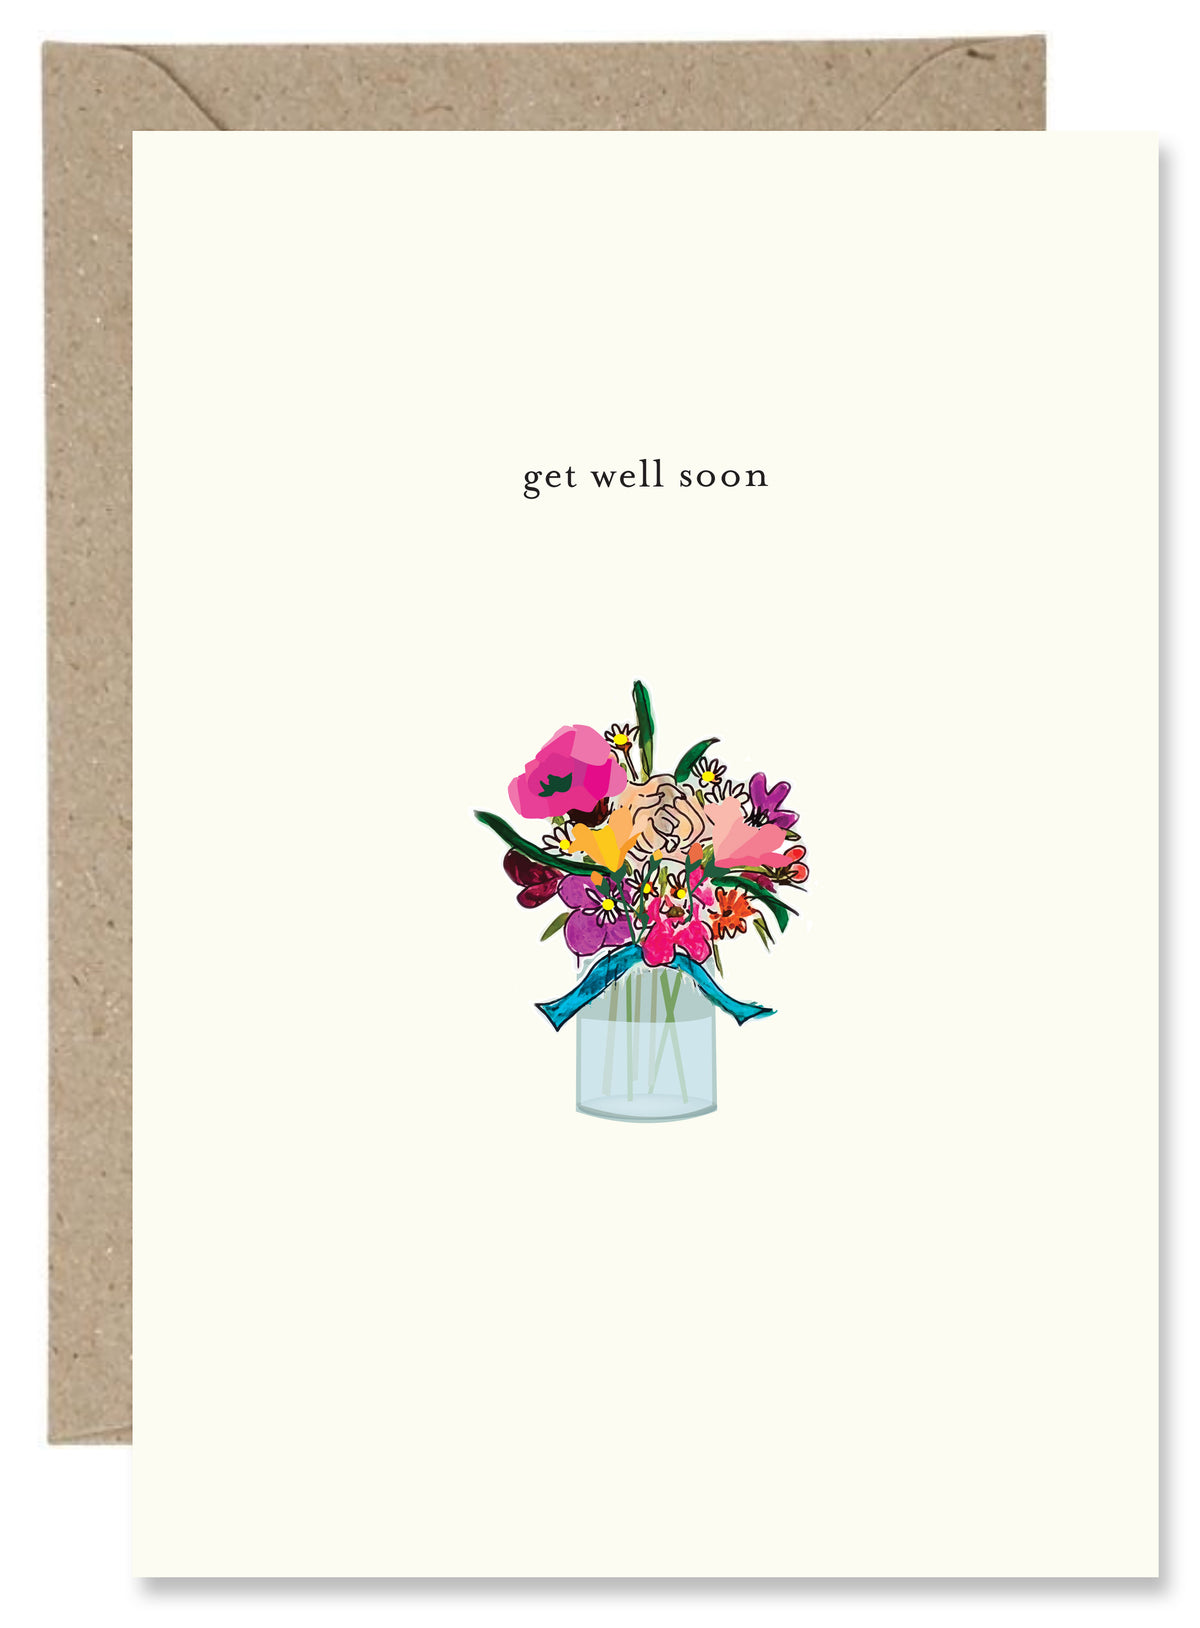 Get Well Soon Flowers